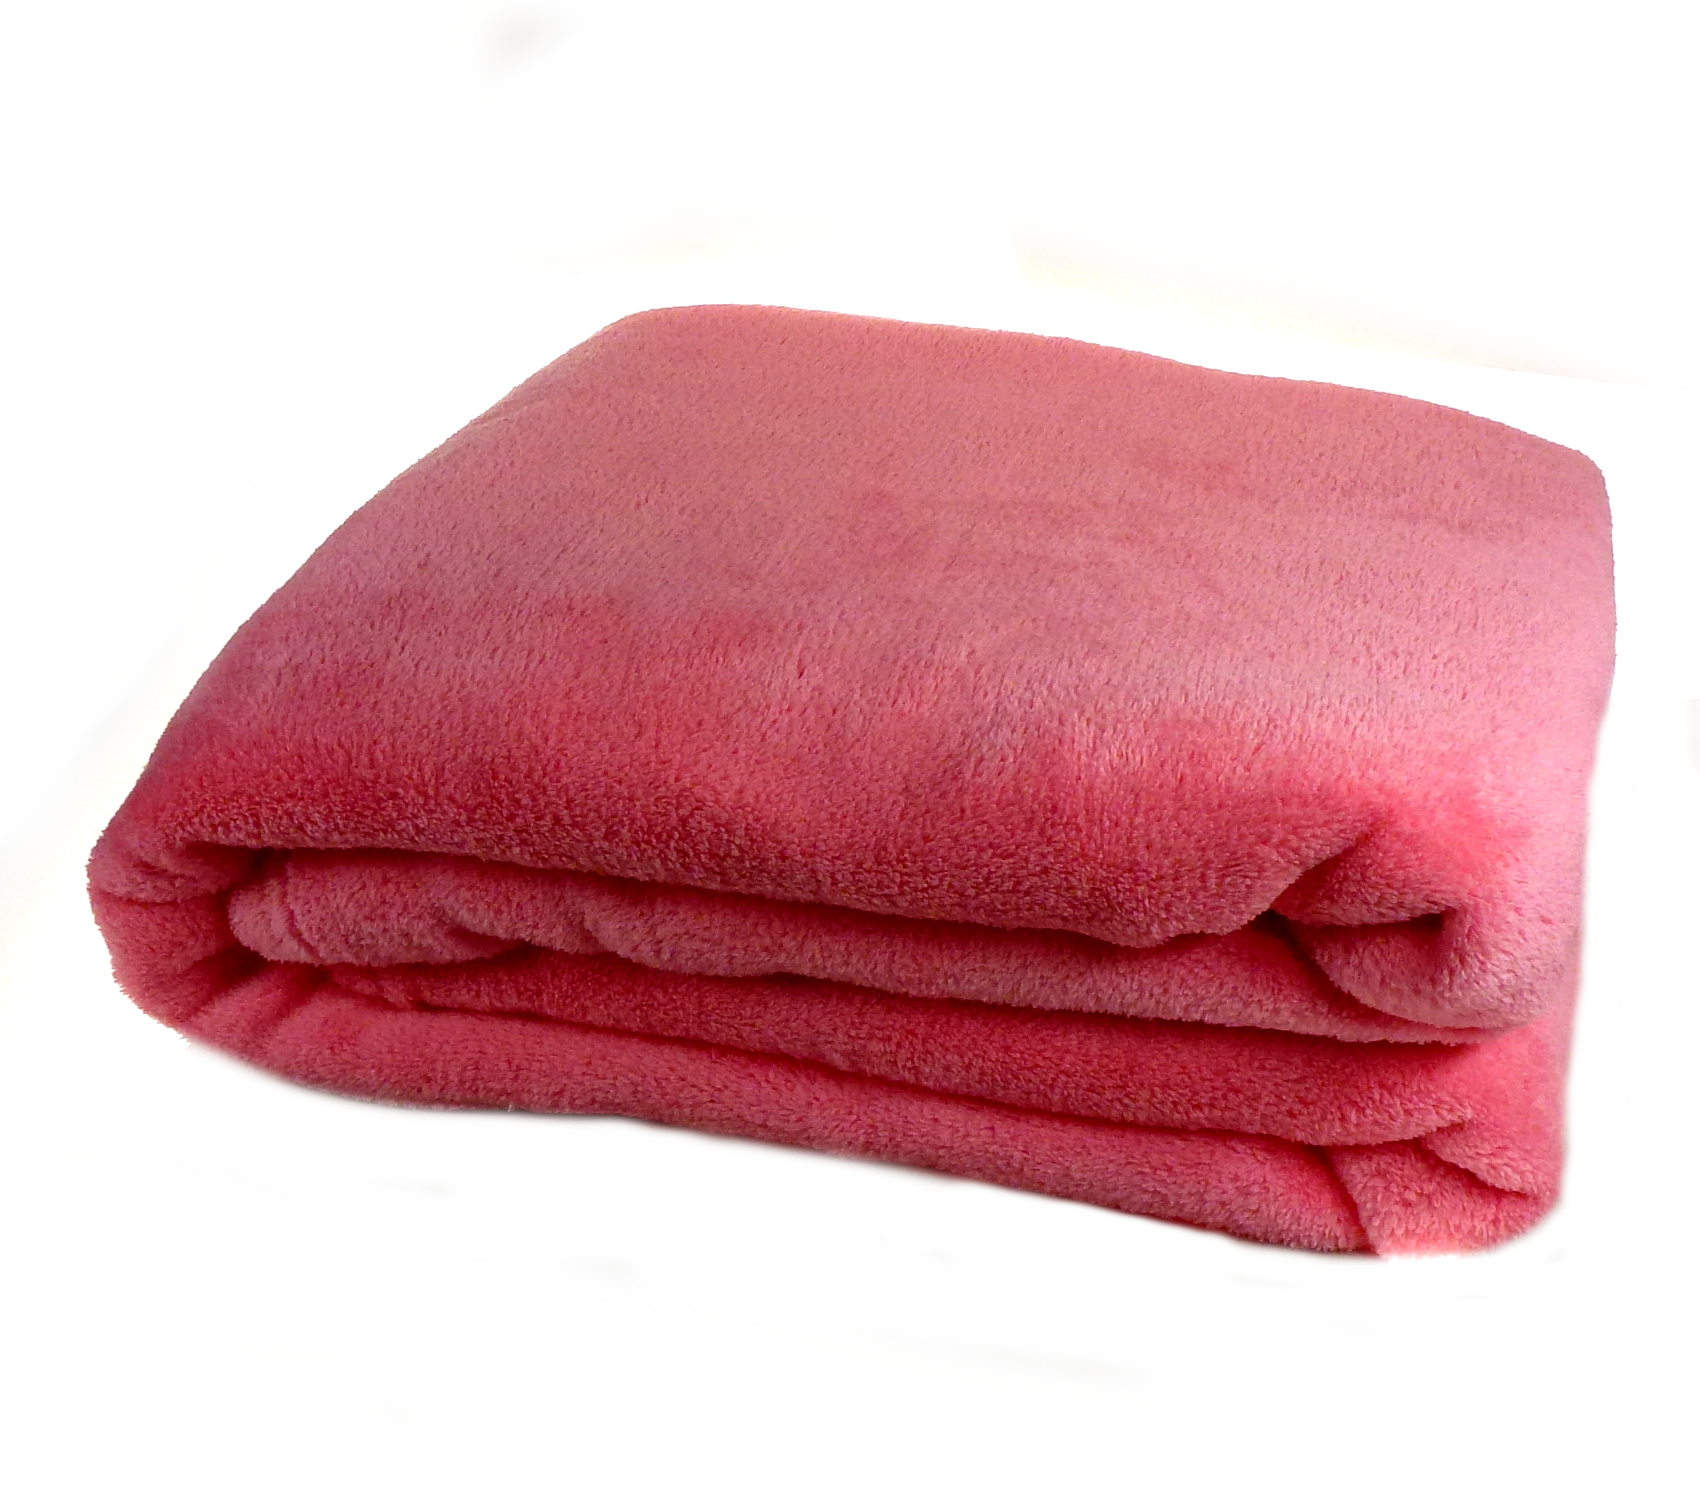 Blush Pink Soft Coral Fleece Blanket Luxury Fleecy Cosy Warm Bed ...